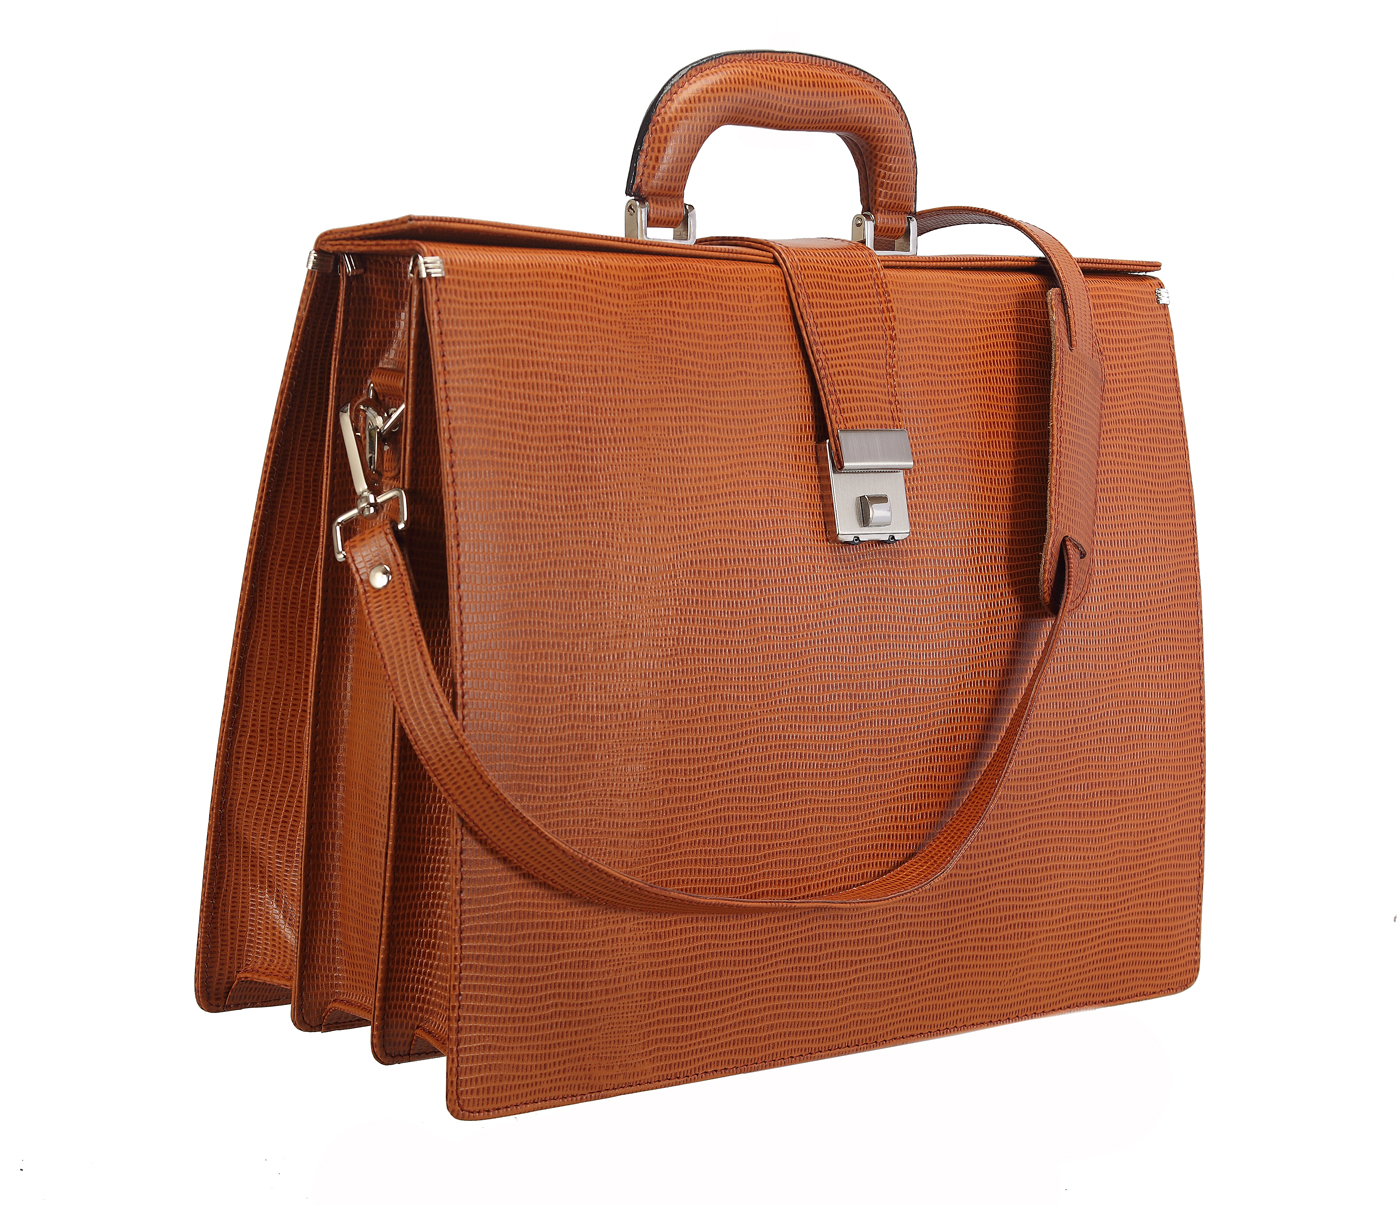 Portfolio / Laptop Bag-Paul-Laptop office executive bag in Genuine Leather - Tan